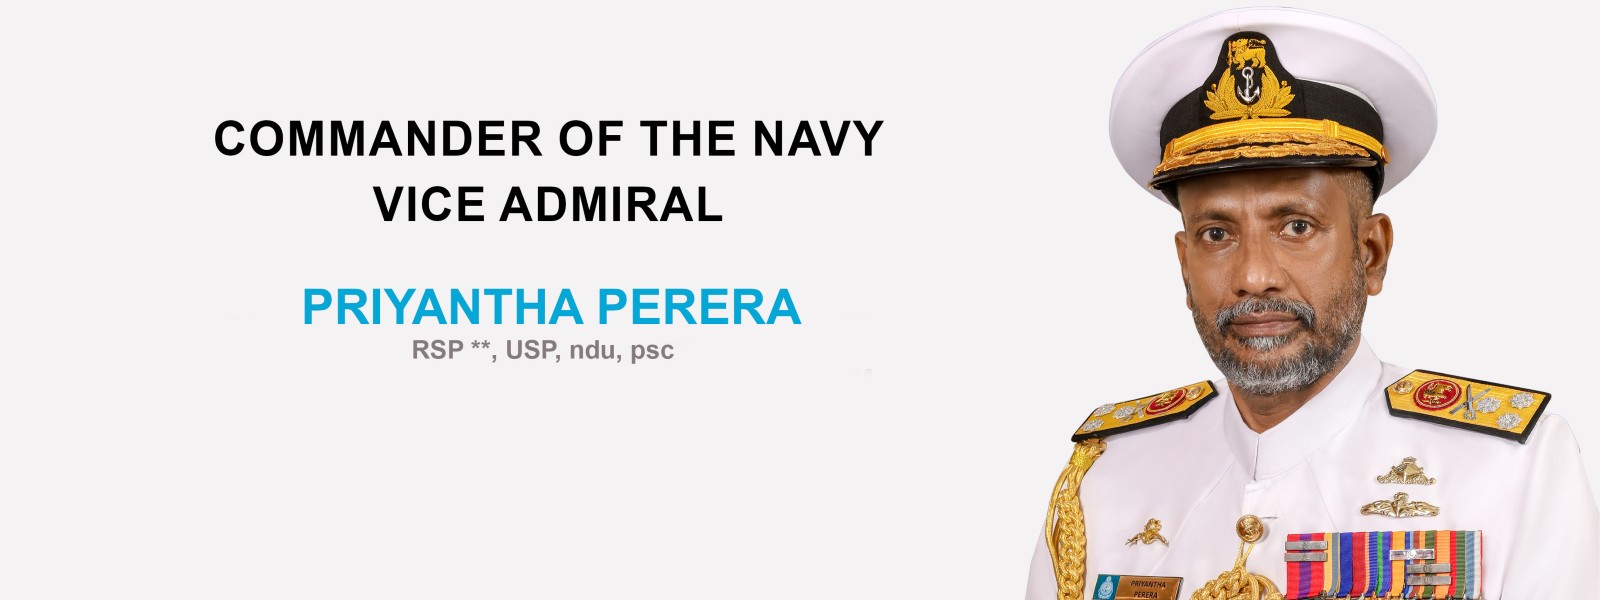 Vice Admiral Priyantha Perera - New Navy Chief